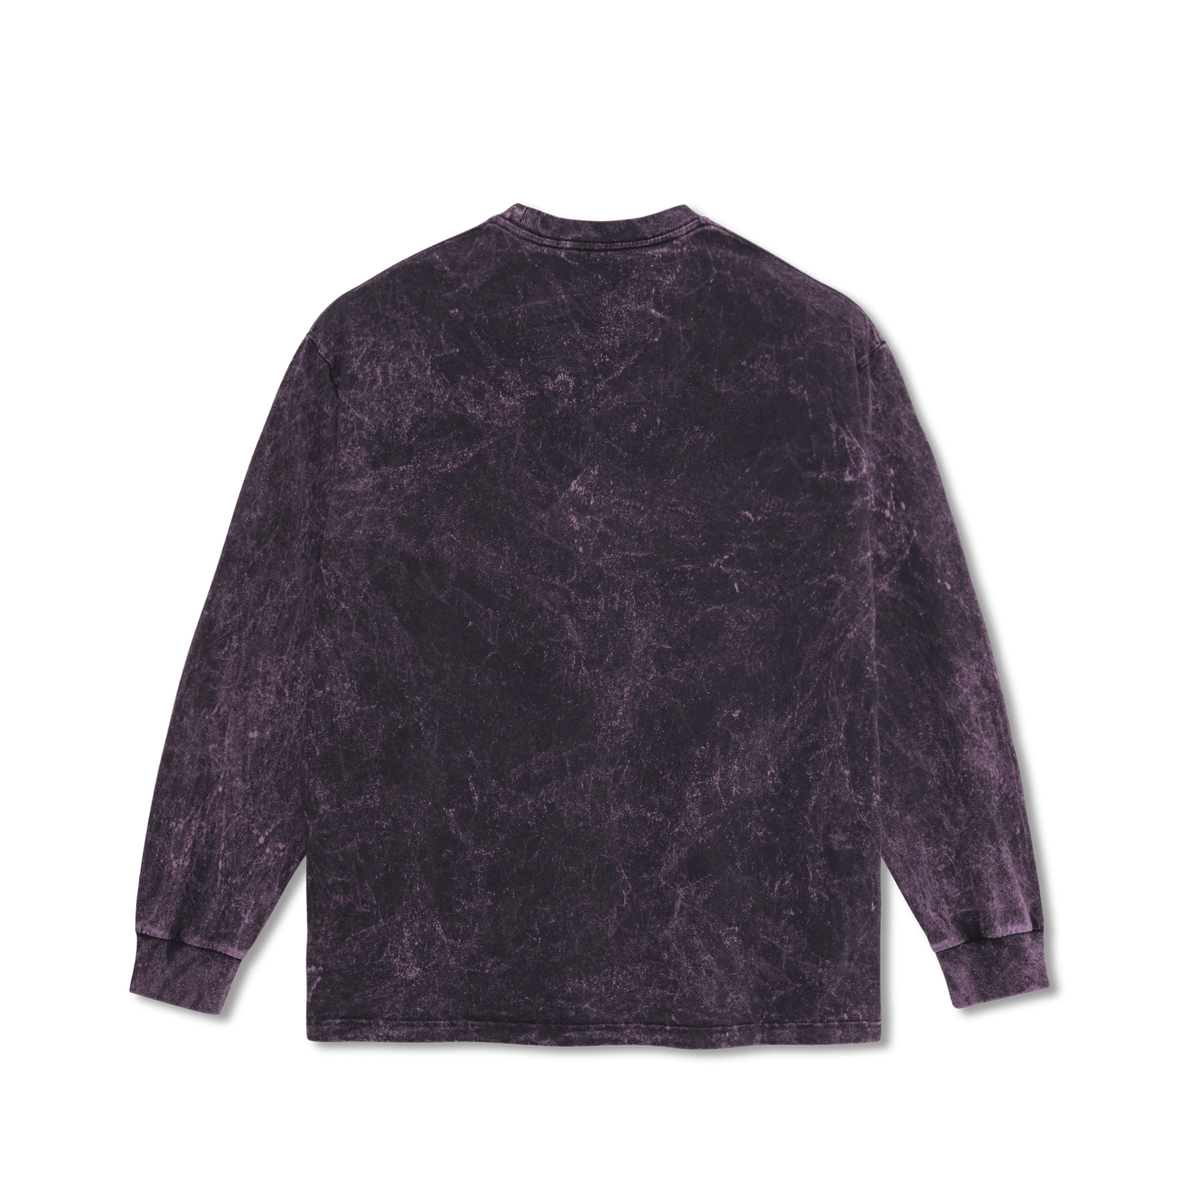 Polar Polar Skate Co Pride Long Sleeve T-Shirt | Purple Acid Wash Tees | The Vines